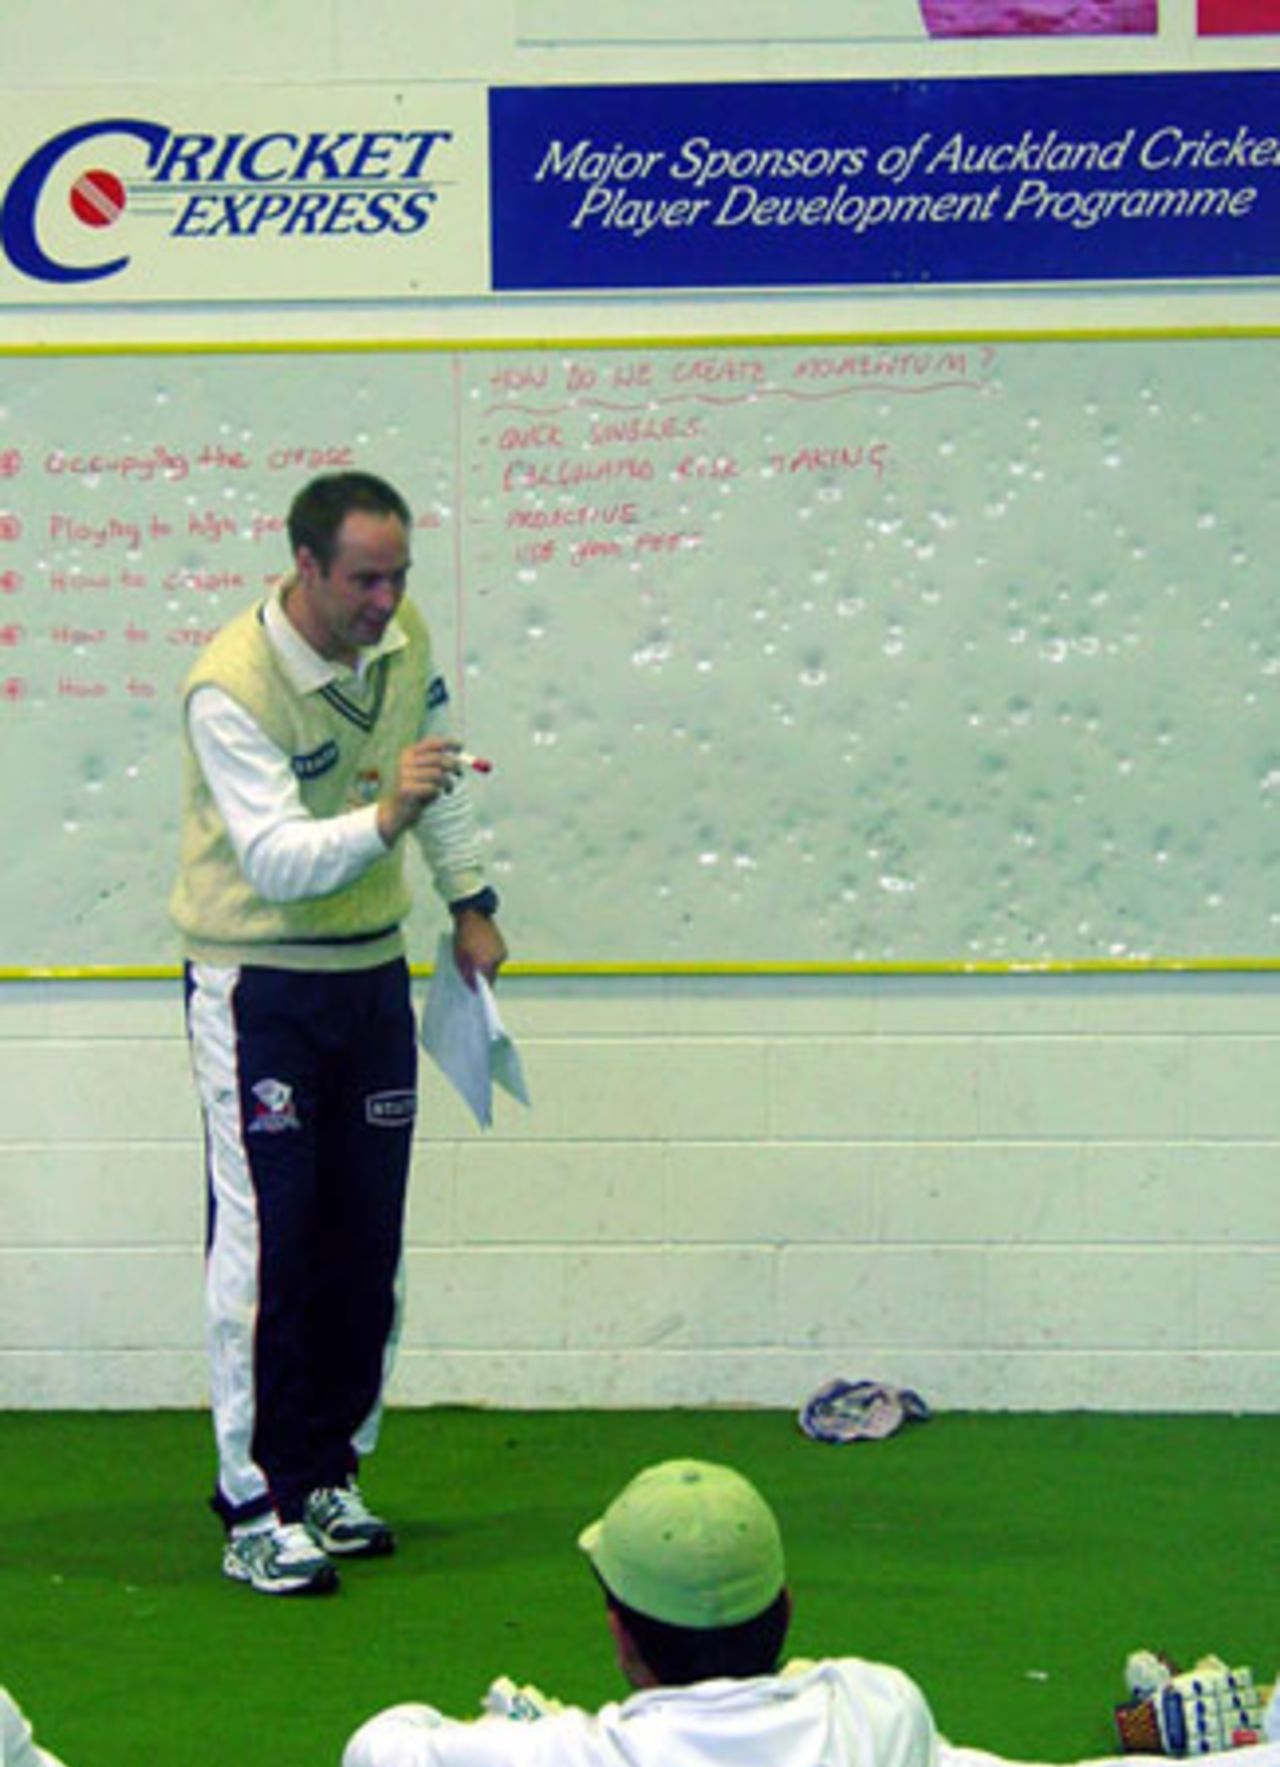 Auckland player Matt Horne teaches students at the Auckland Cricket Association winter academy. July 2003.